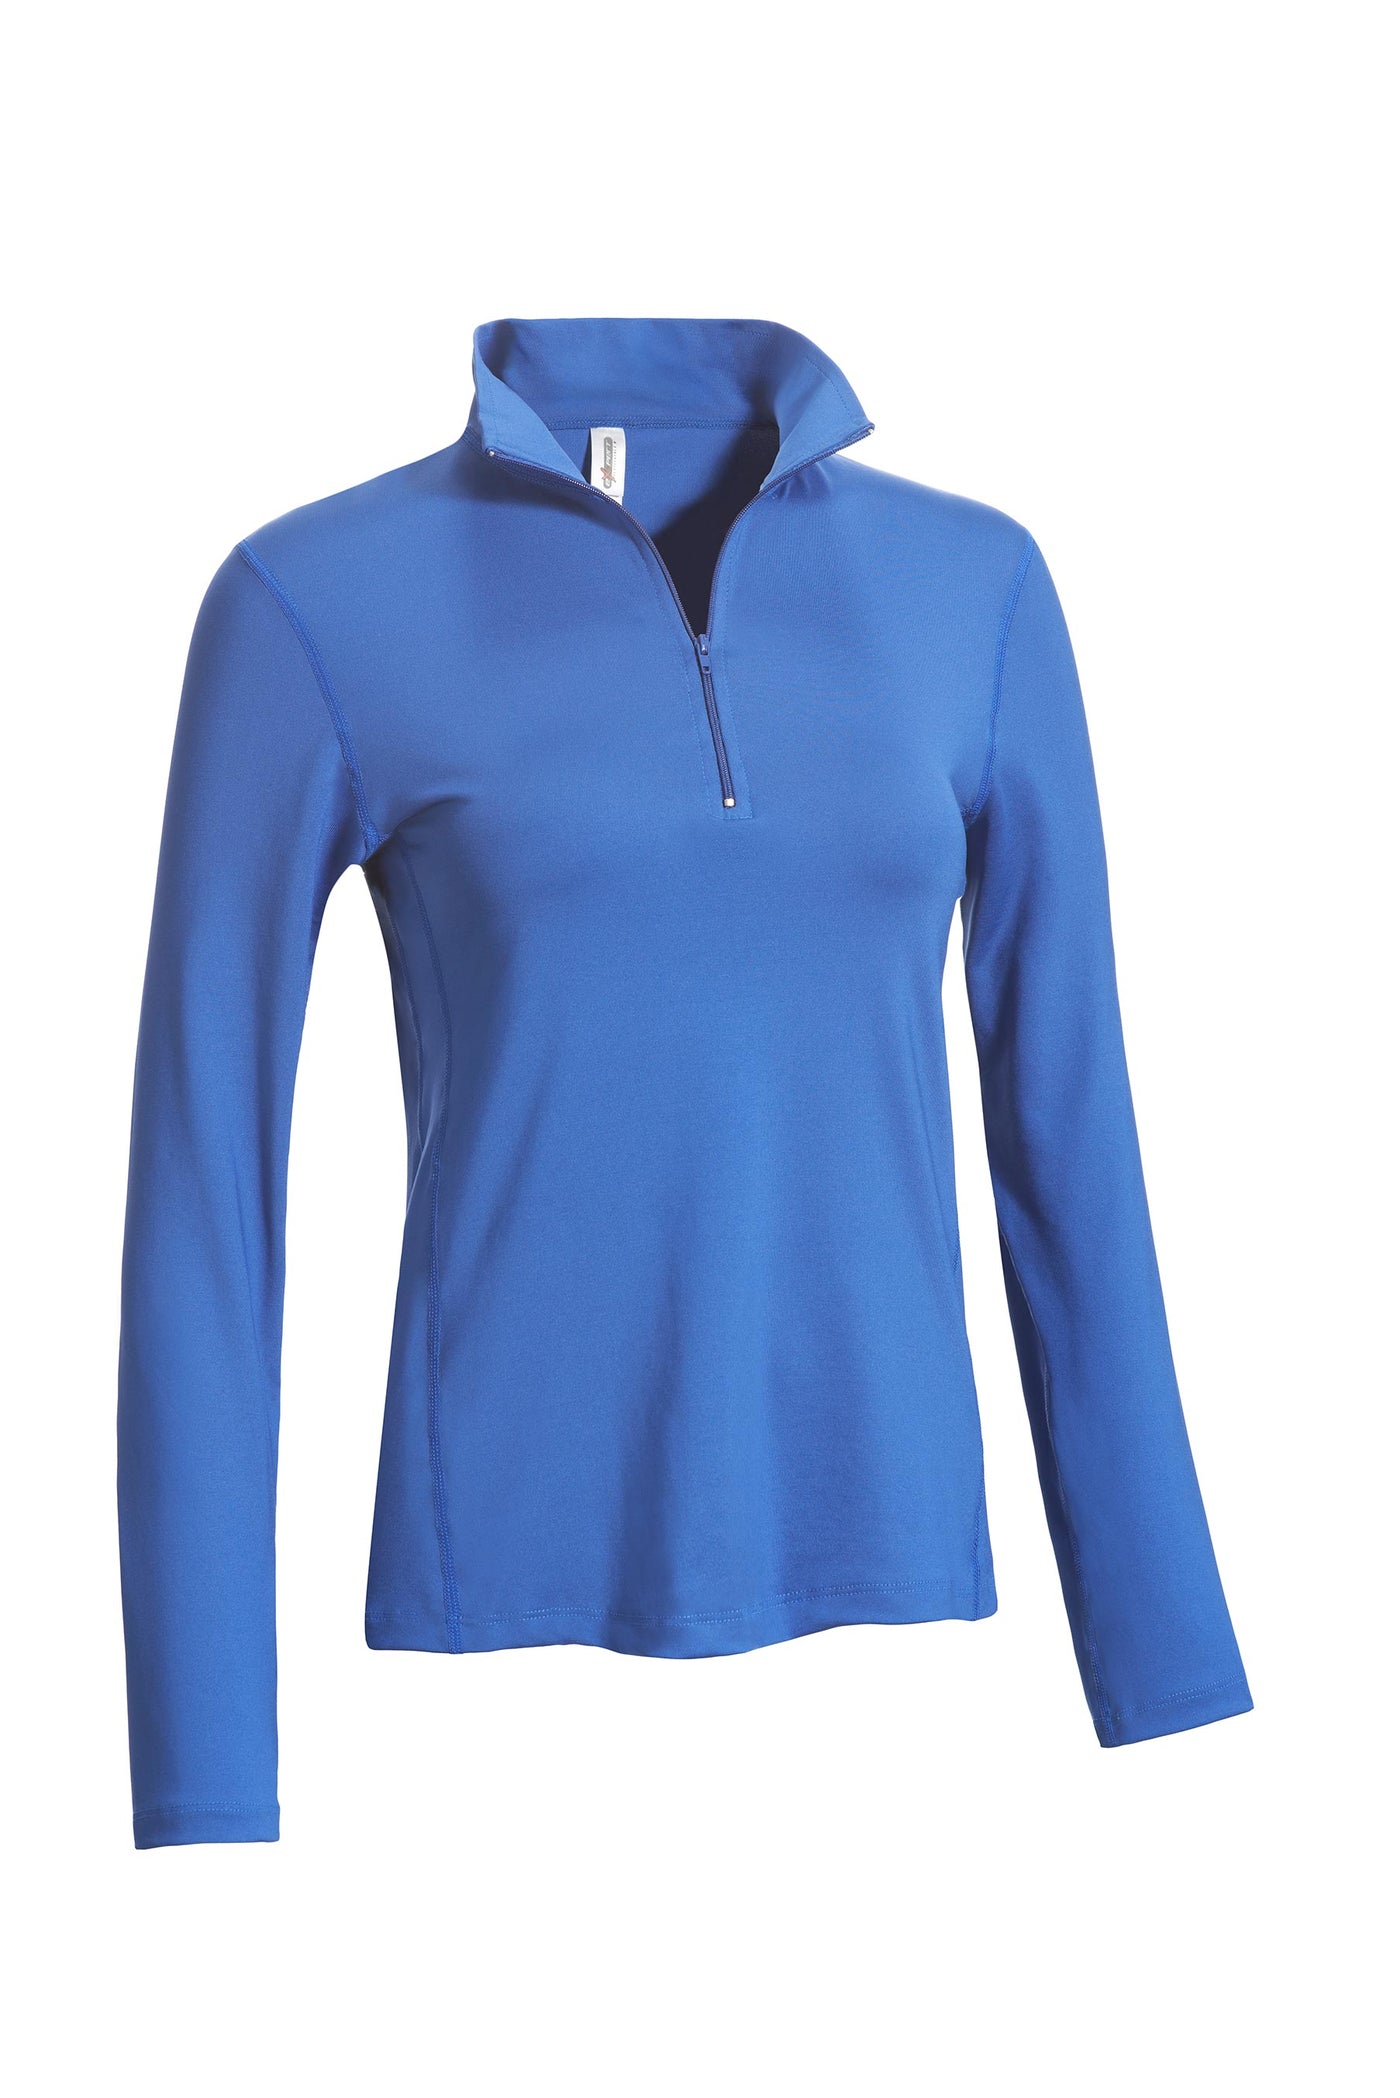 Quarter Zip Track Suit Pullover Top 🇺🇸 - Expert Brand Apparel#color_cadet-blue